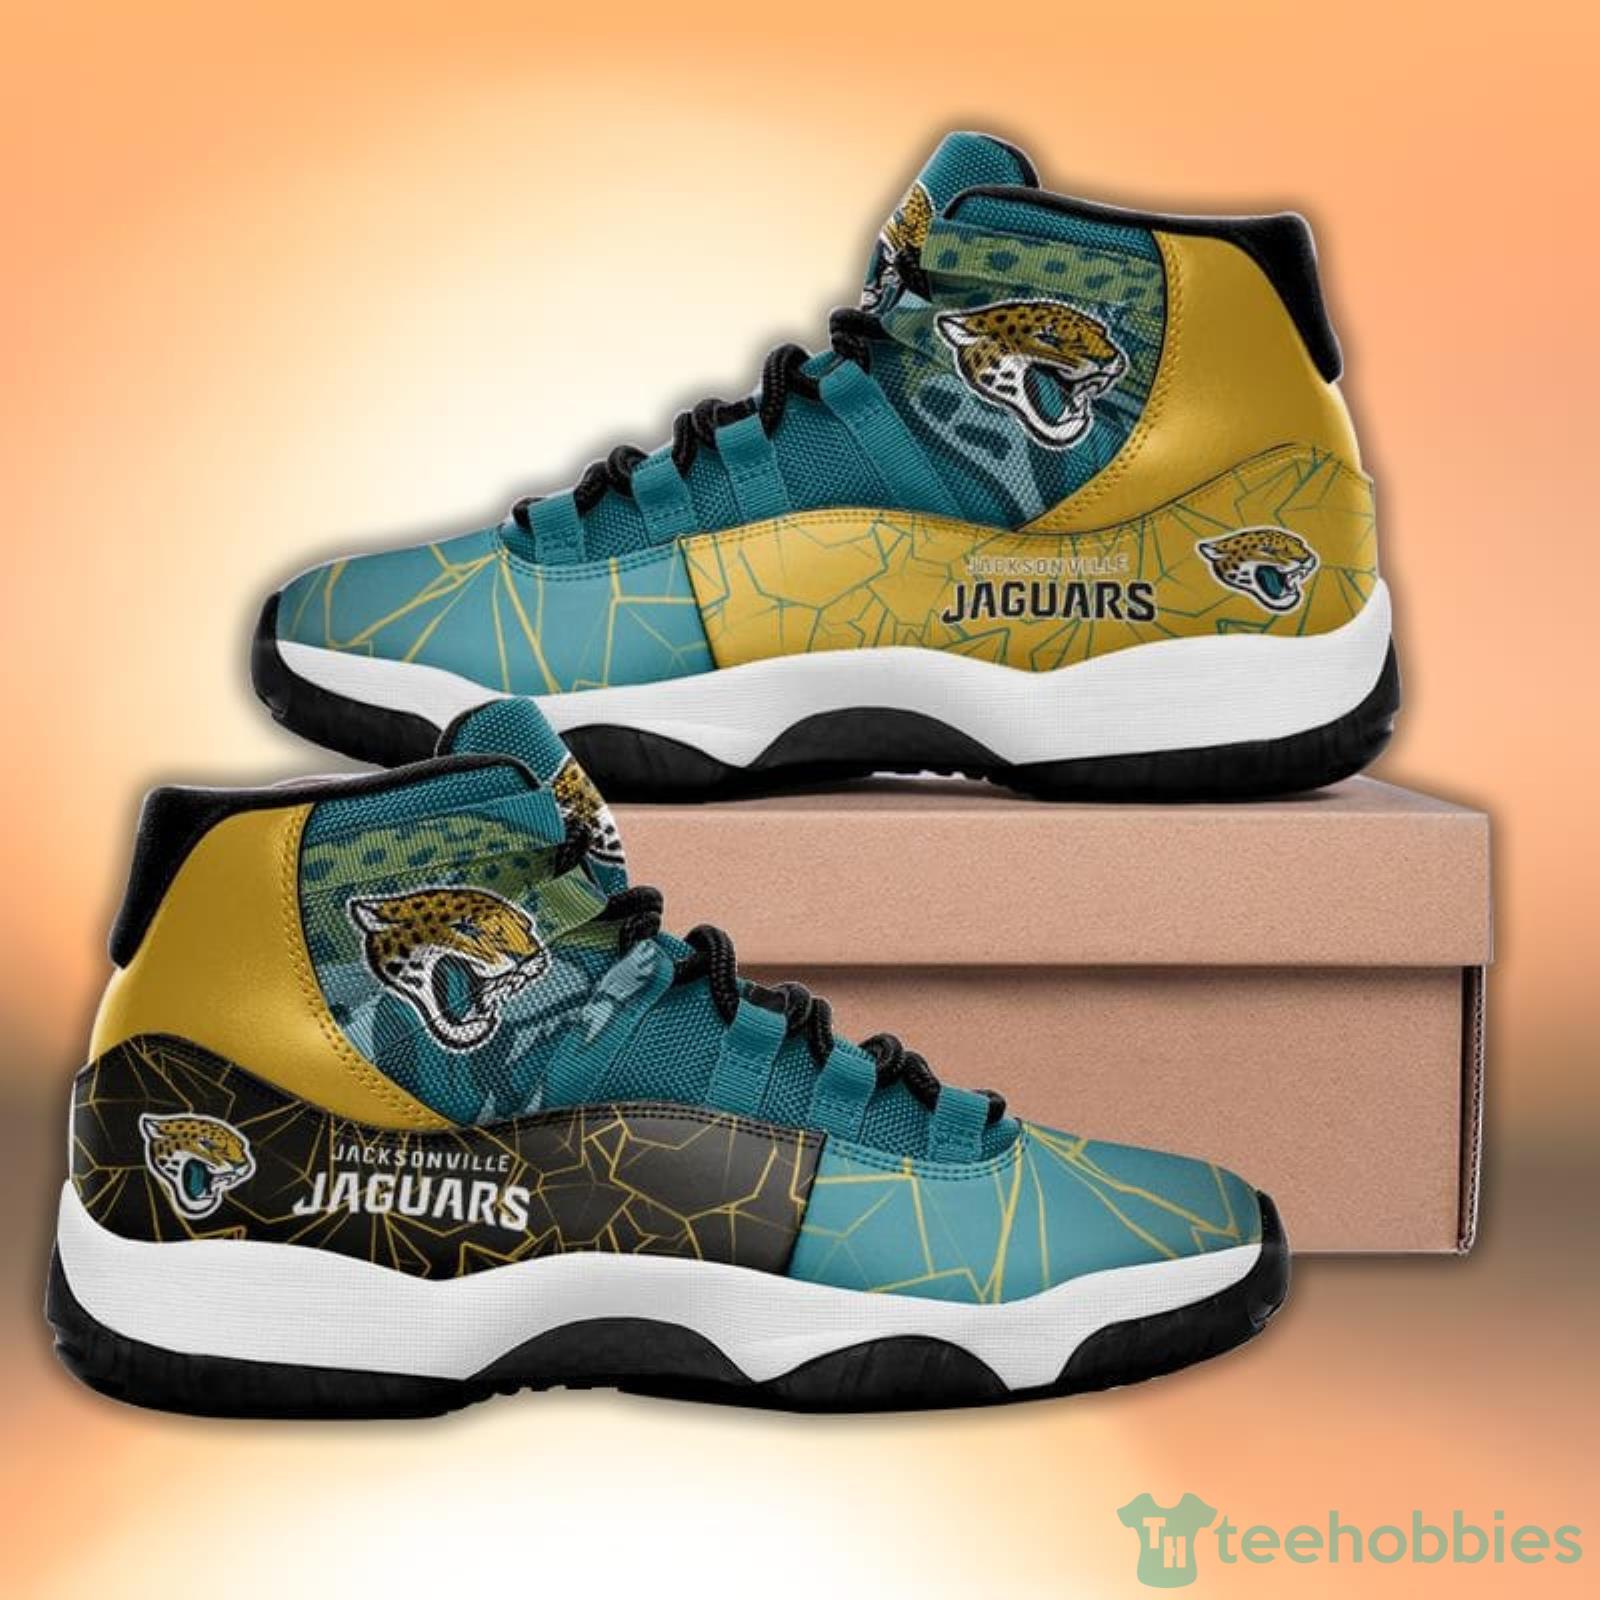 jacksonville jaguars slippers